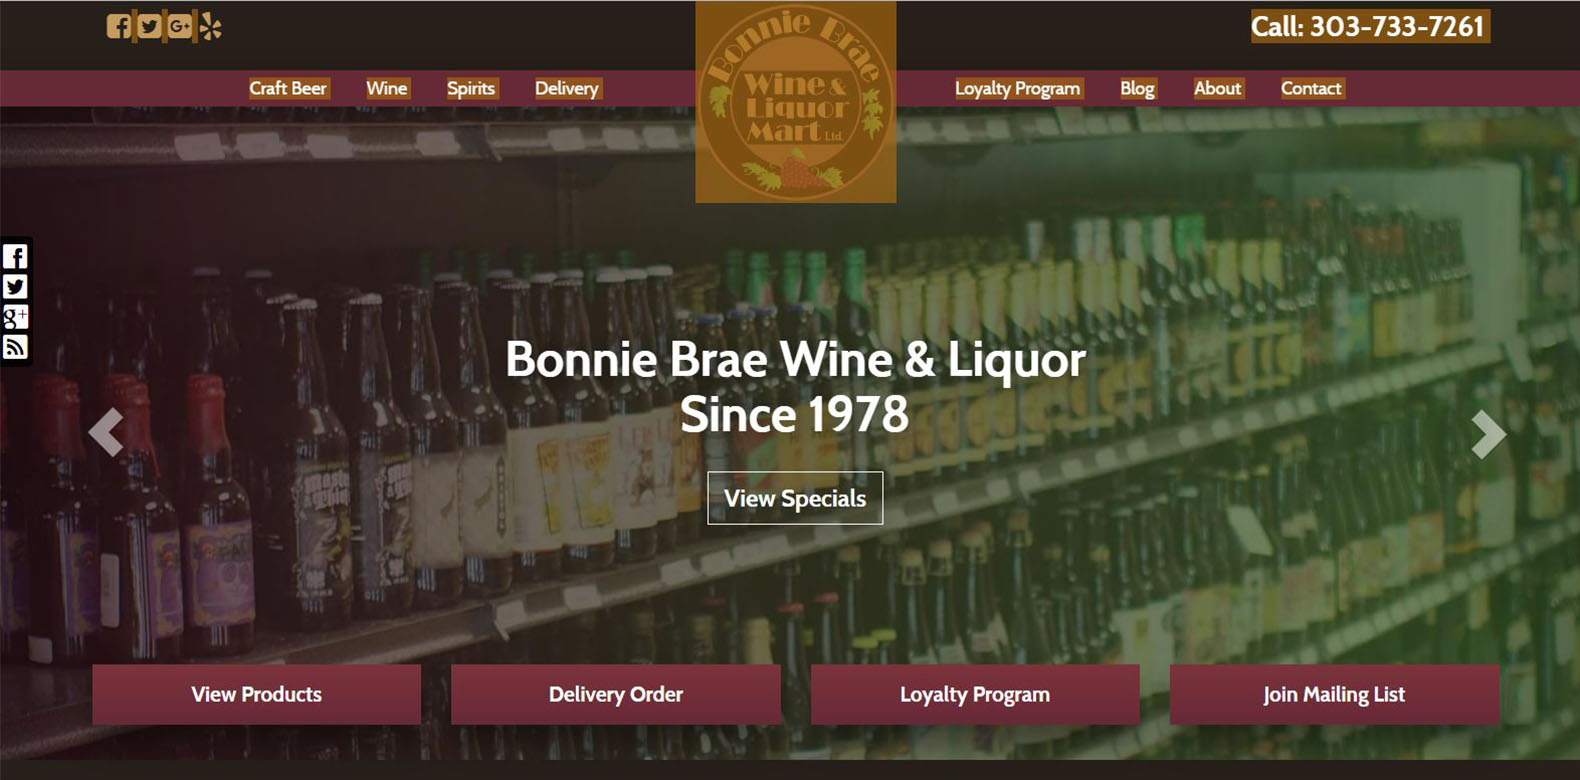 
New Website Launched: Bonnie Brae Wine & Liquor